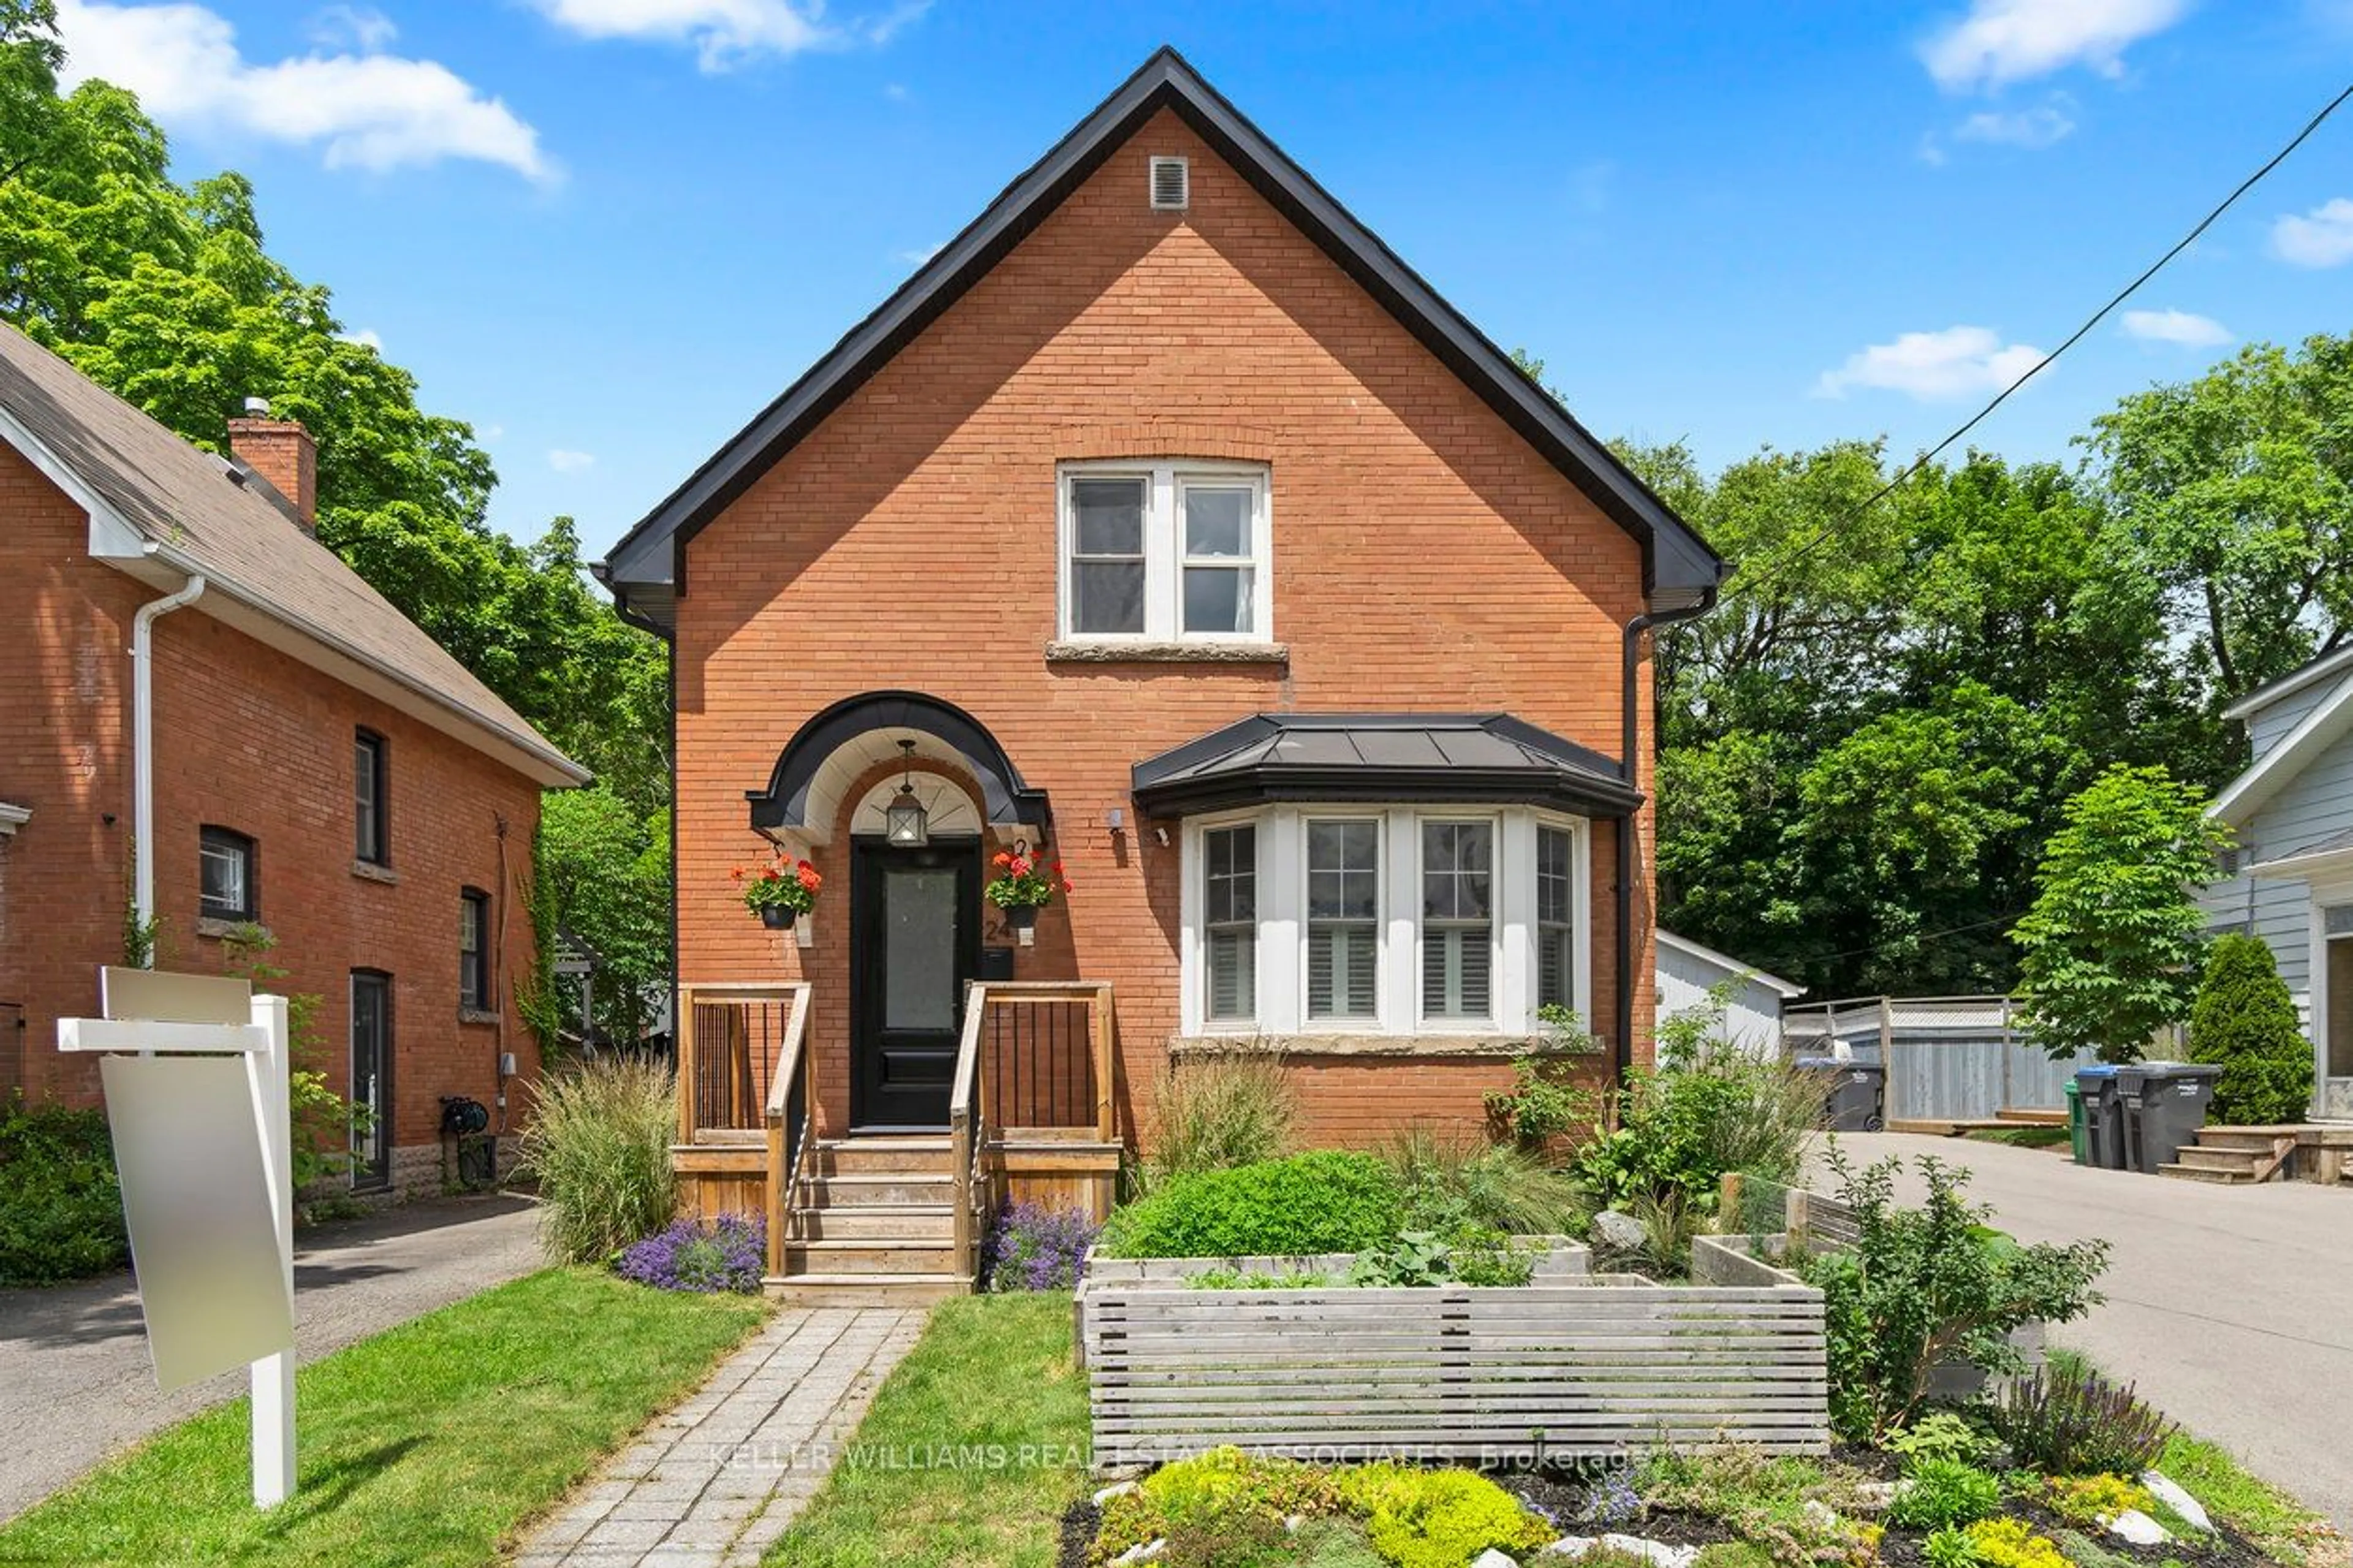 Home with brick exterior material for 24 Ellen St, Brampton Ontario L6V 1J6